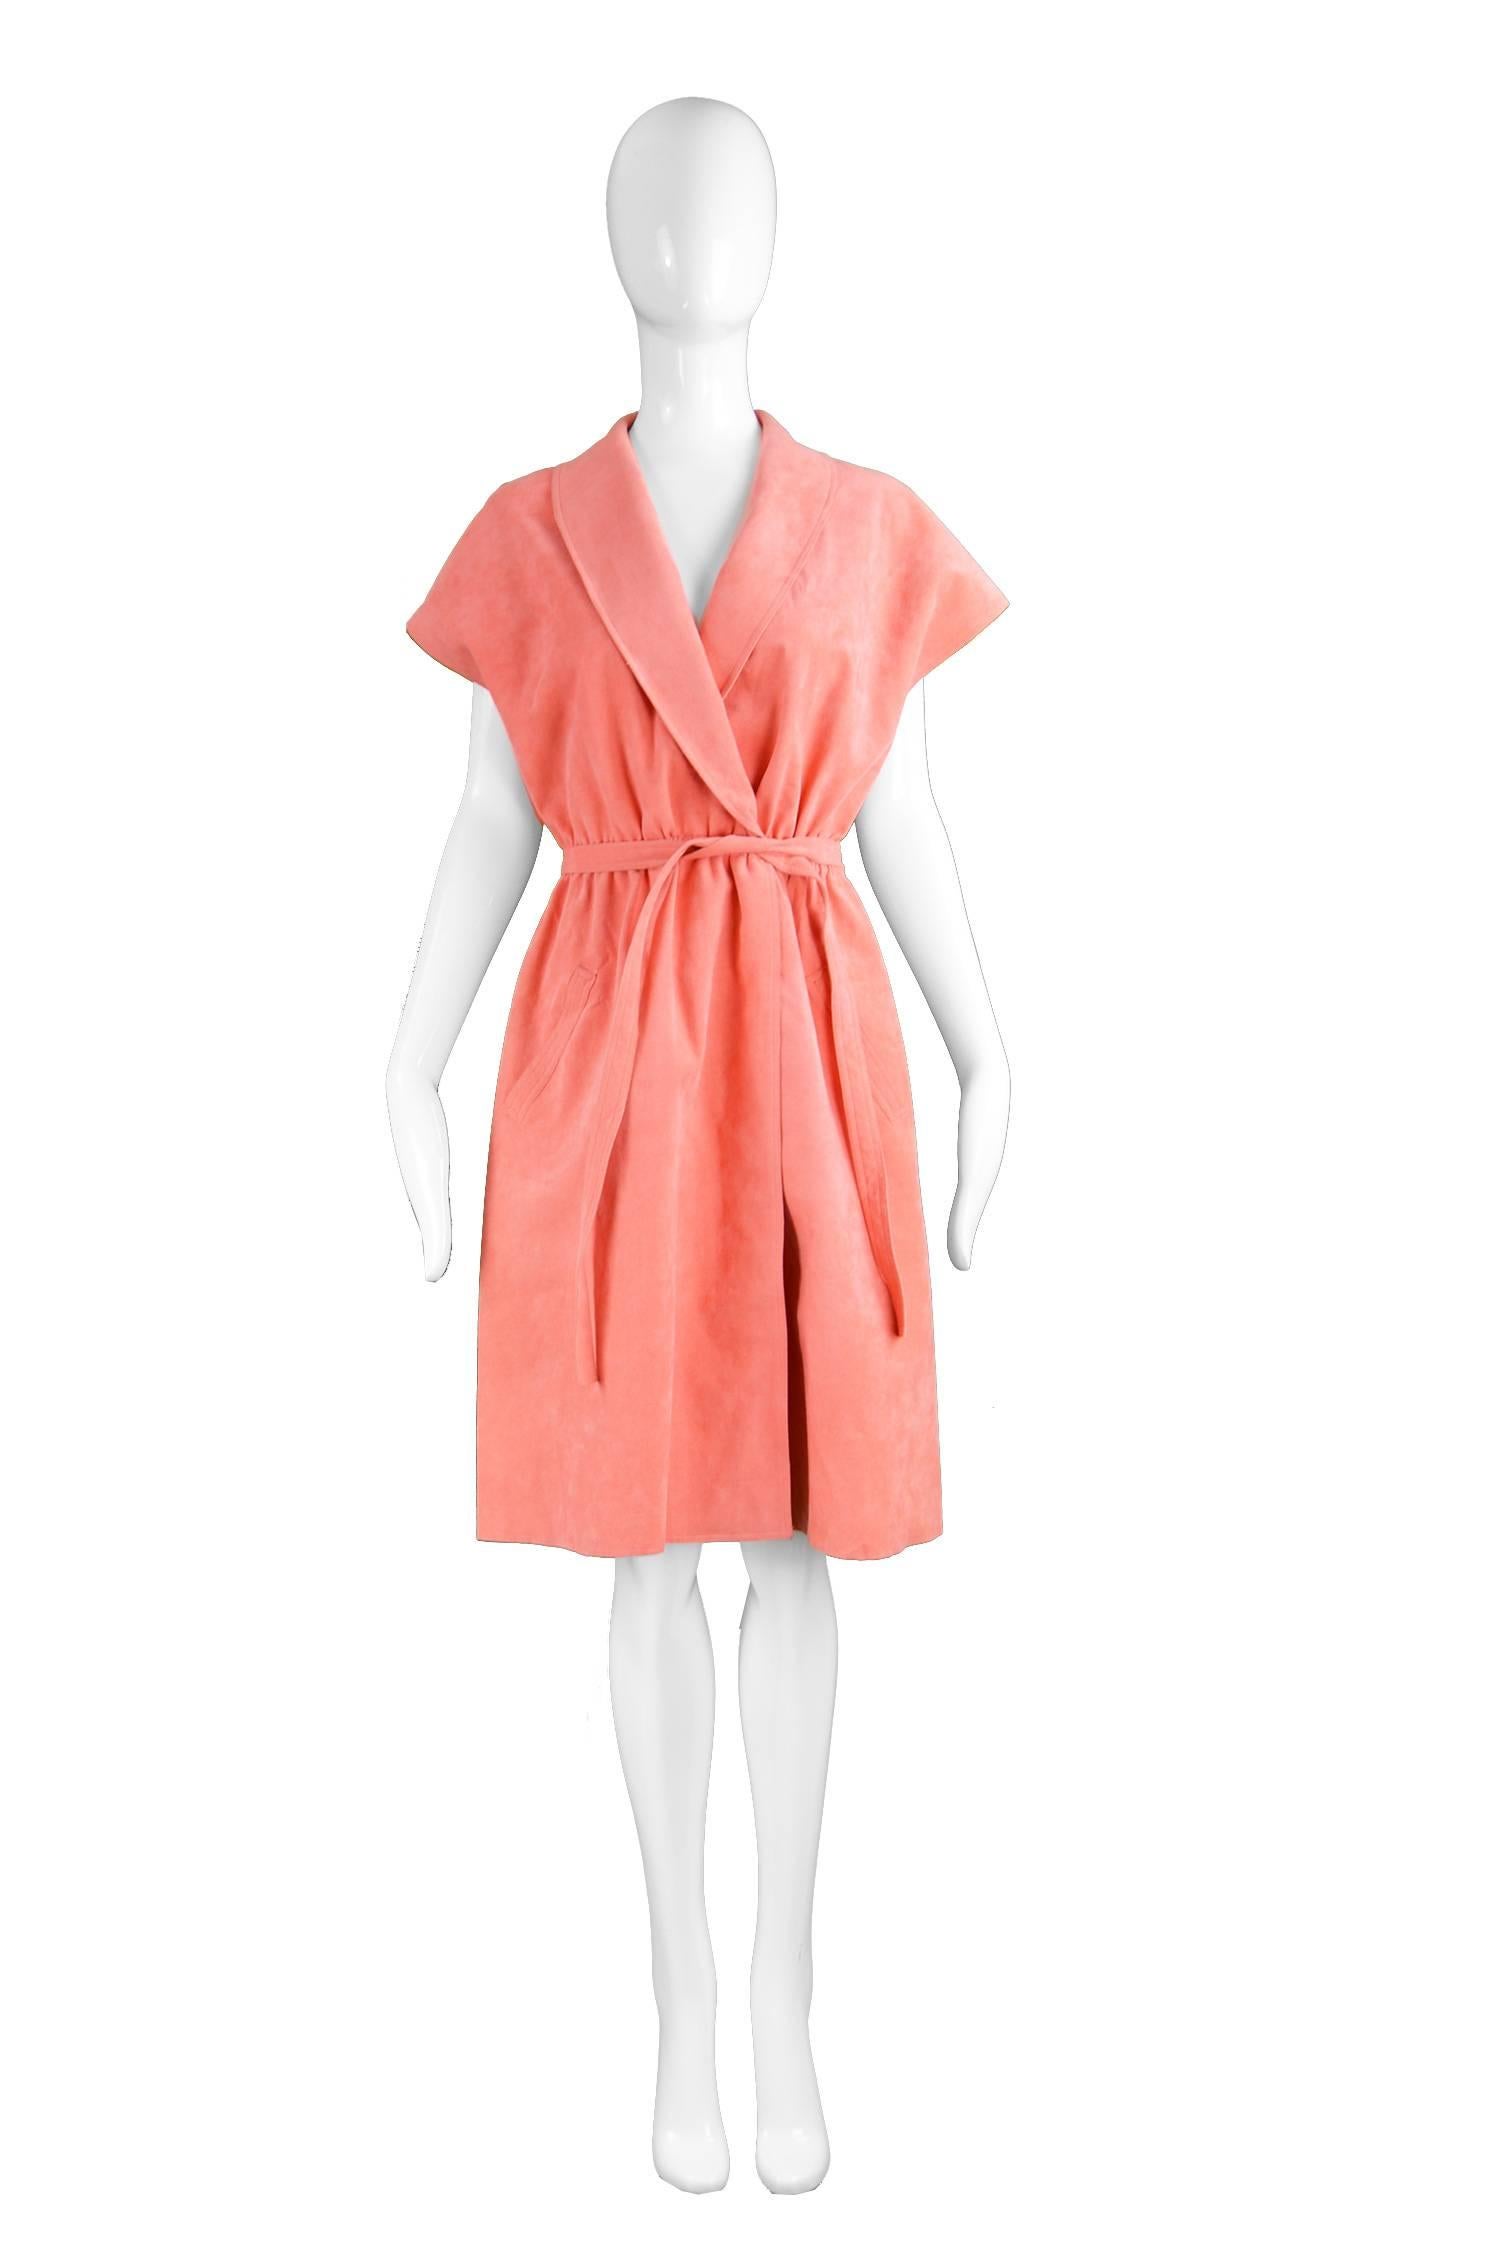 Halston Vintage Ultrasuede Coral Peach Cap Sleeve Dress, 1970s 

Estimated Size: UK 14/ US 10/ EU 42. Please check measurements to ensure fit. 
Bust - 38” / 96cm
Waist - Stretches from 28-34” / 71-86cm
Hips - 44” / 112cm
Length (Shoulder to Hem) -